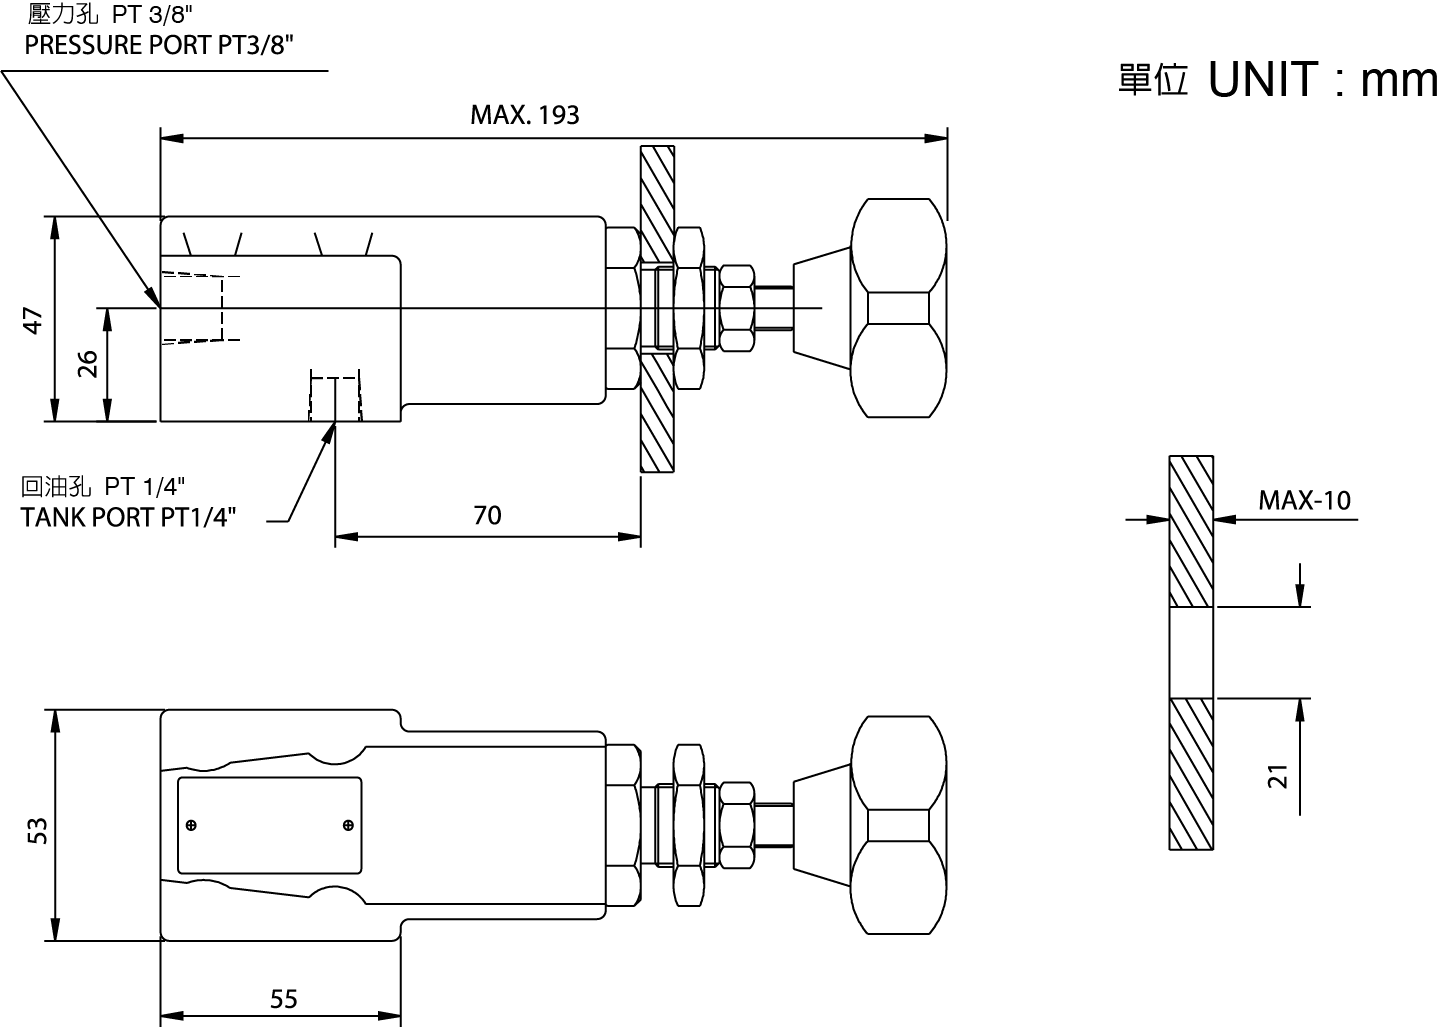 CML遙控型溢流閥DT-01,DG-01(傳統閥) 尺寸圖